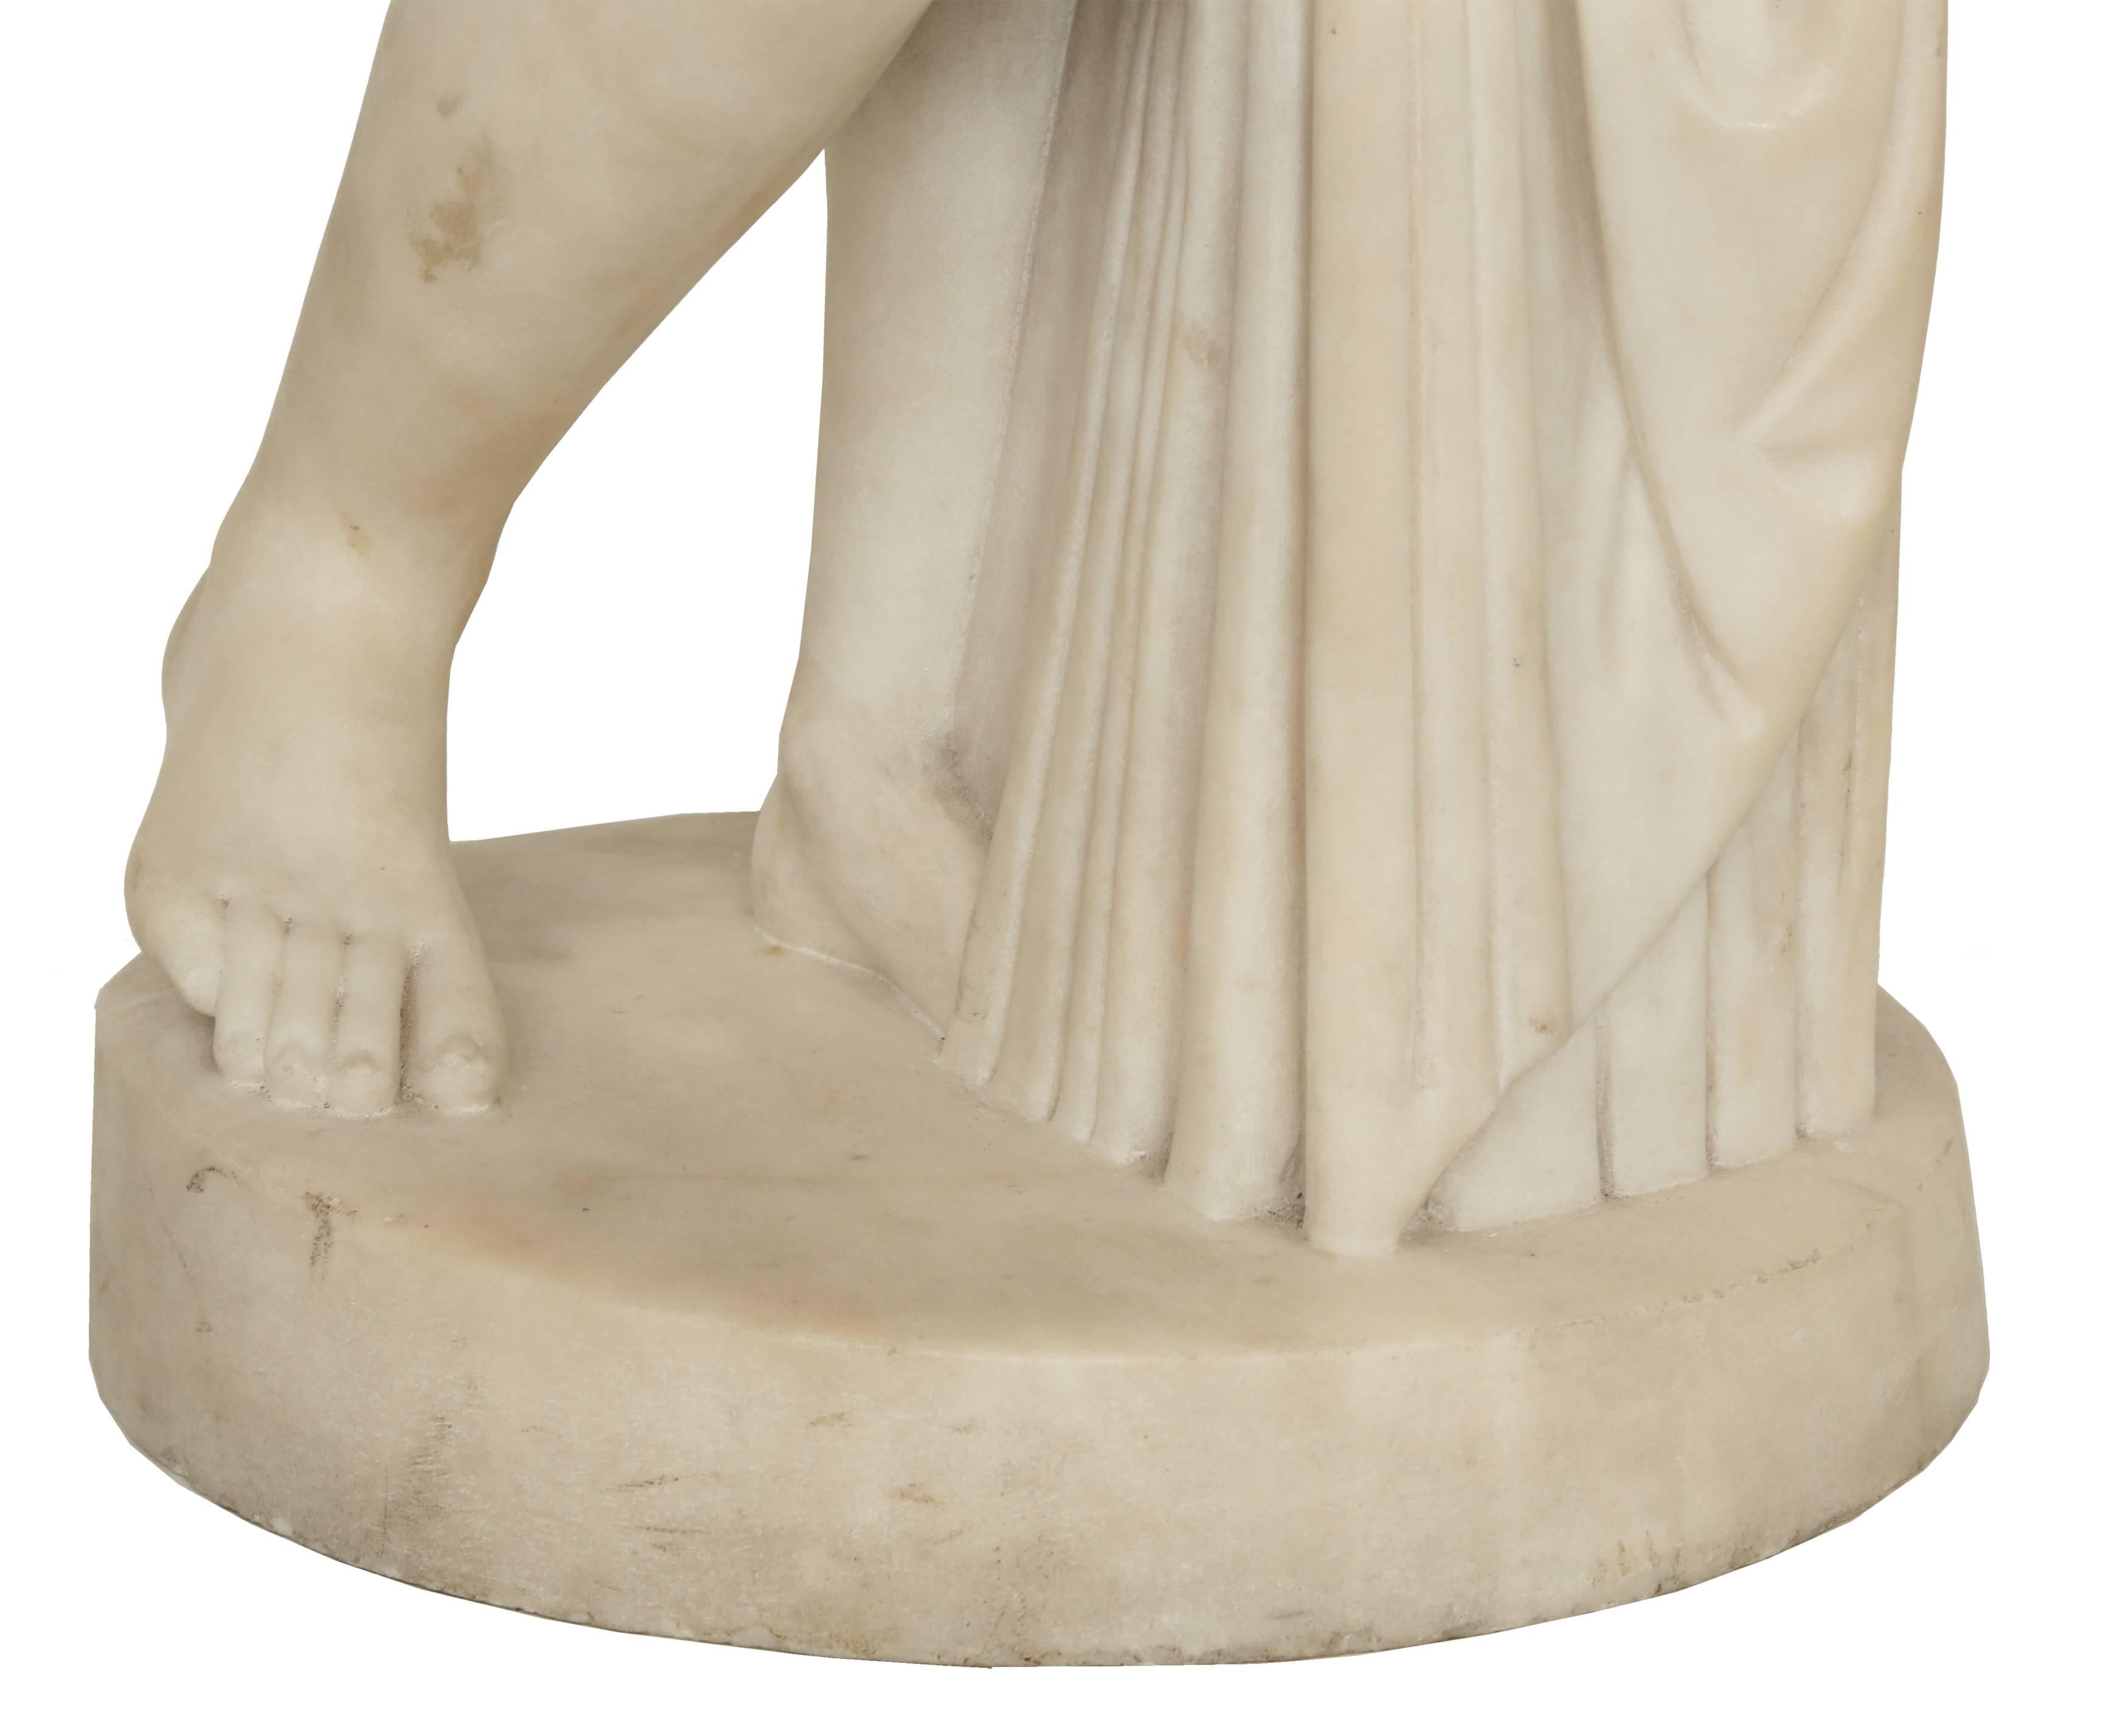 19th Century White Carrara Marble Sculpture of Venus, Signed J VACCA NAPOLI 1809 3